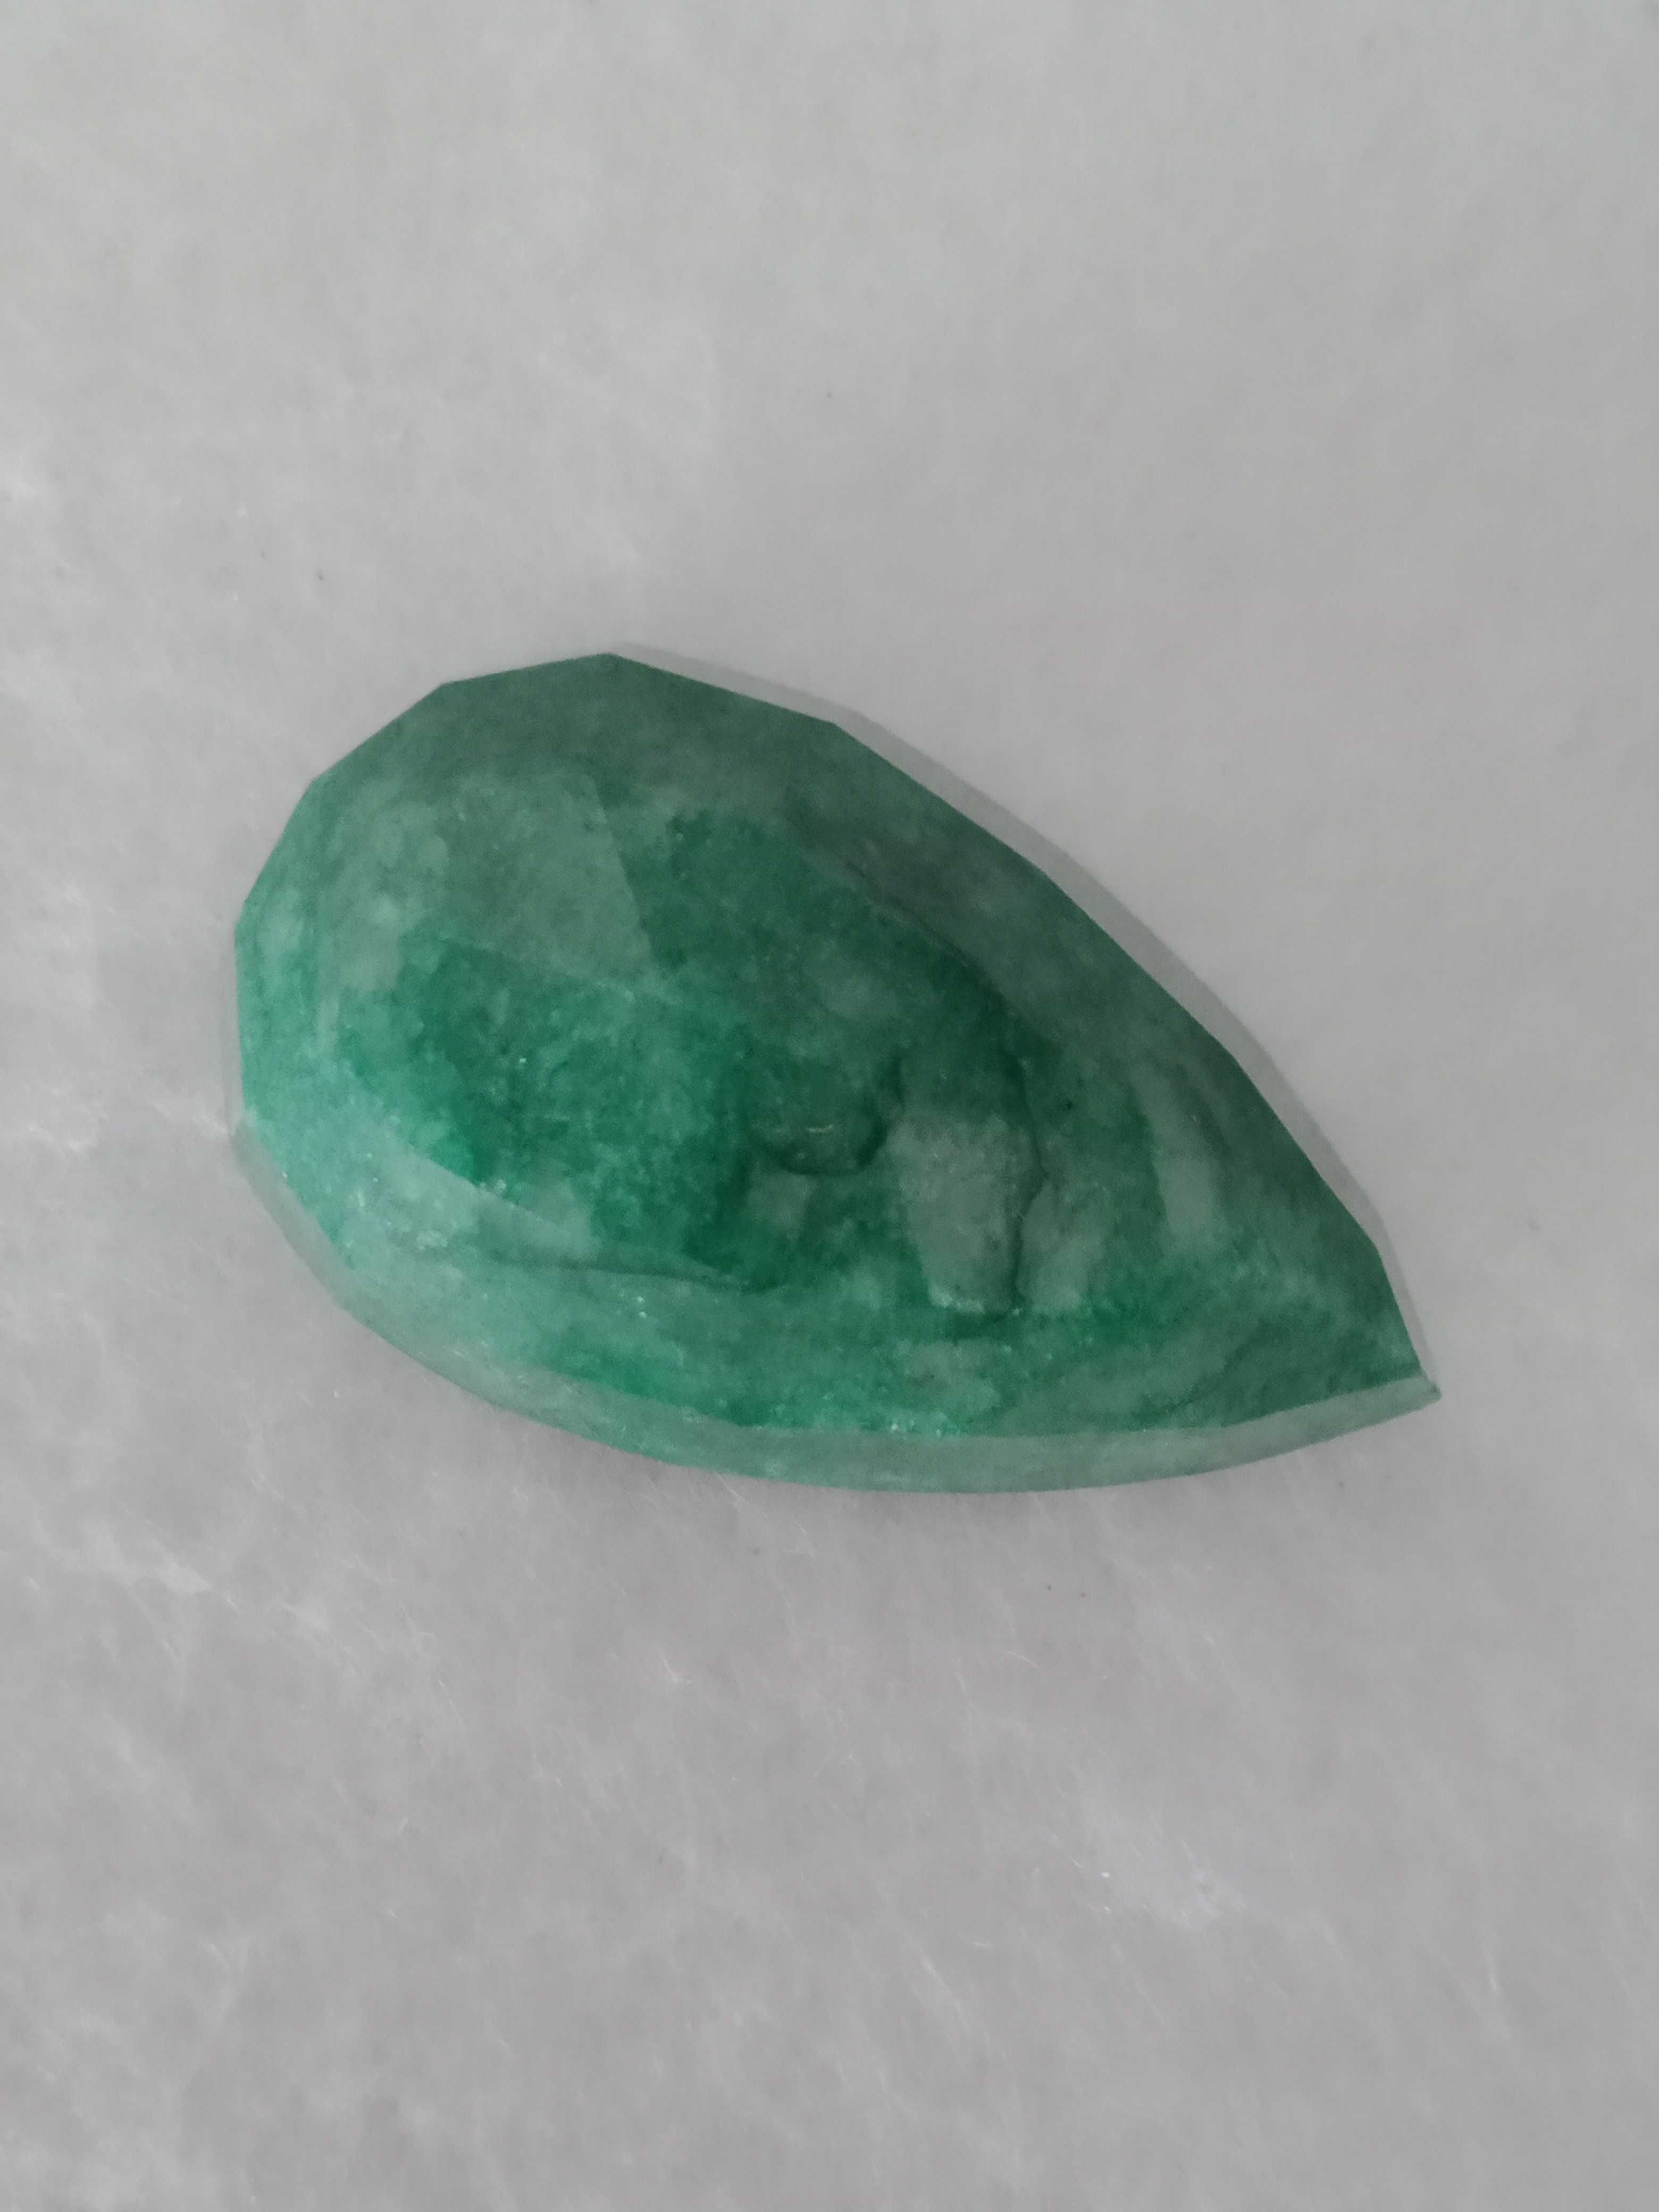 Enorme e bonita esmeralda pedra preciosa natural 123 Cts.Portes grátis